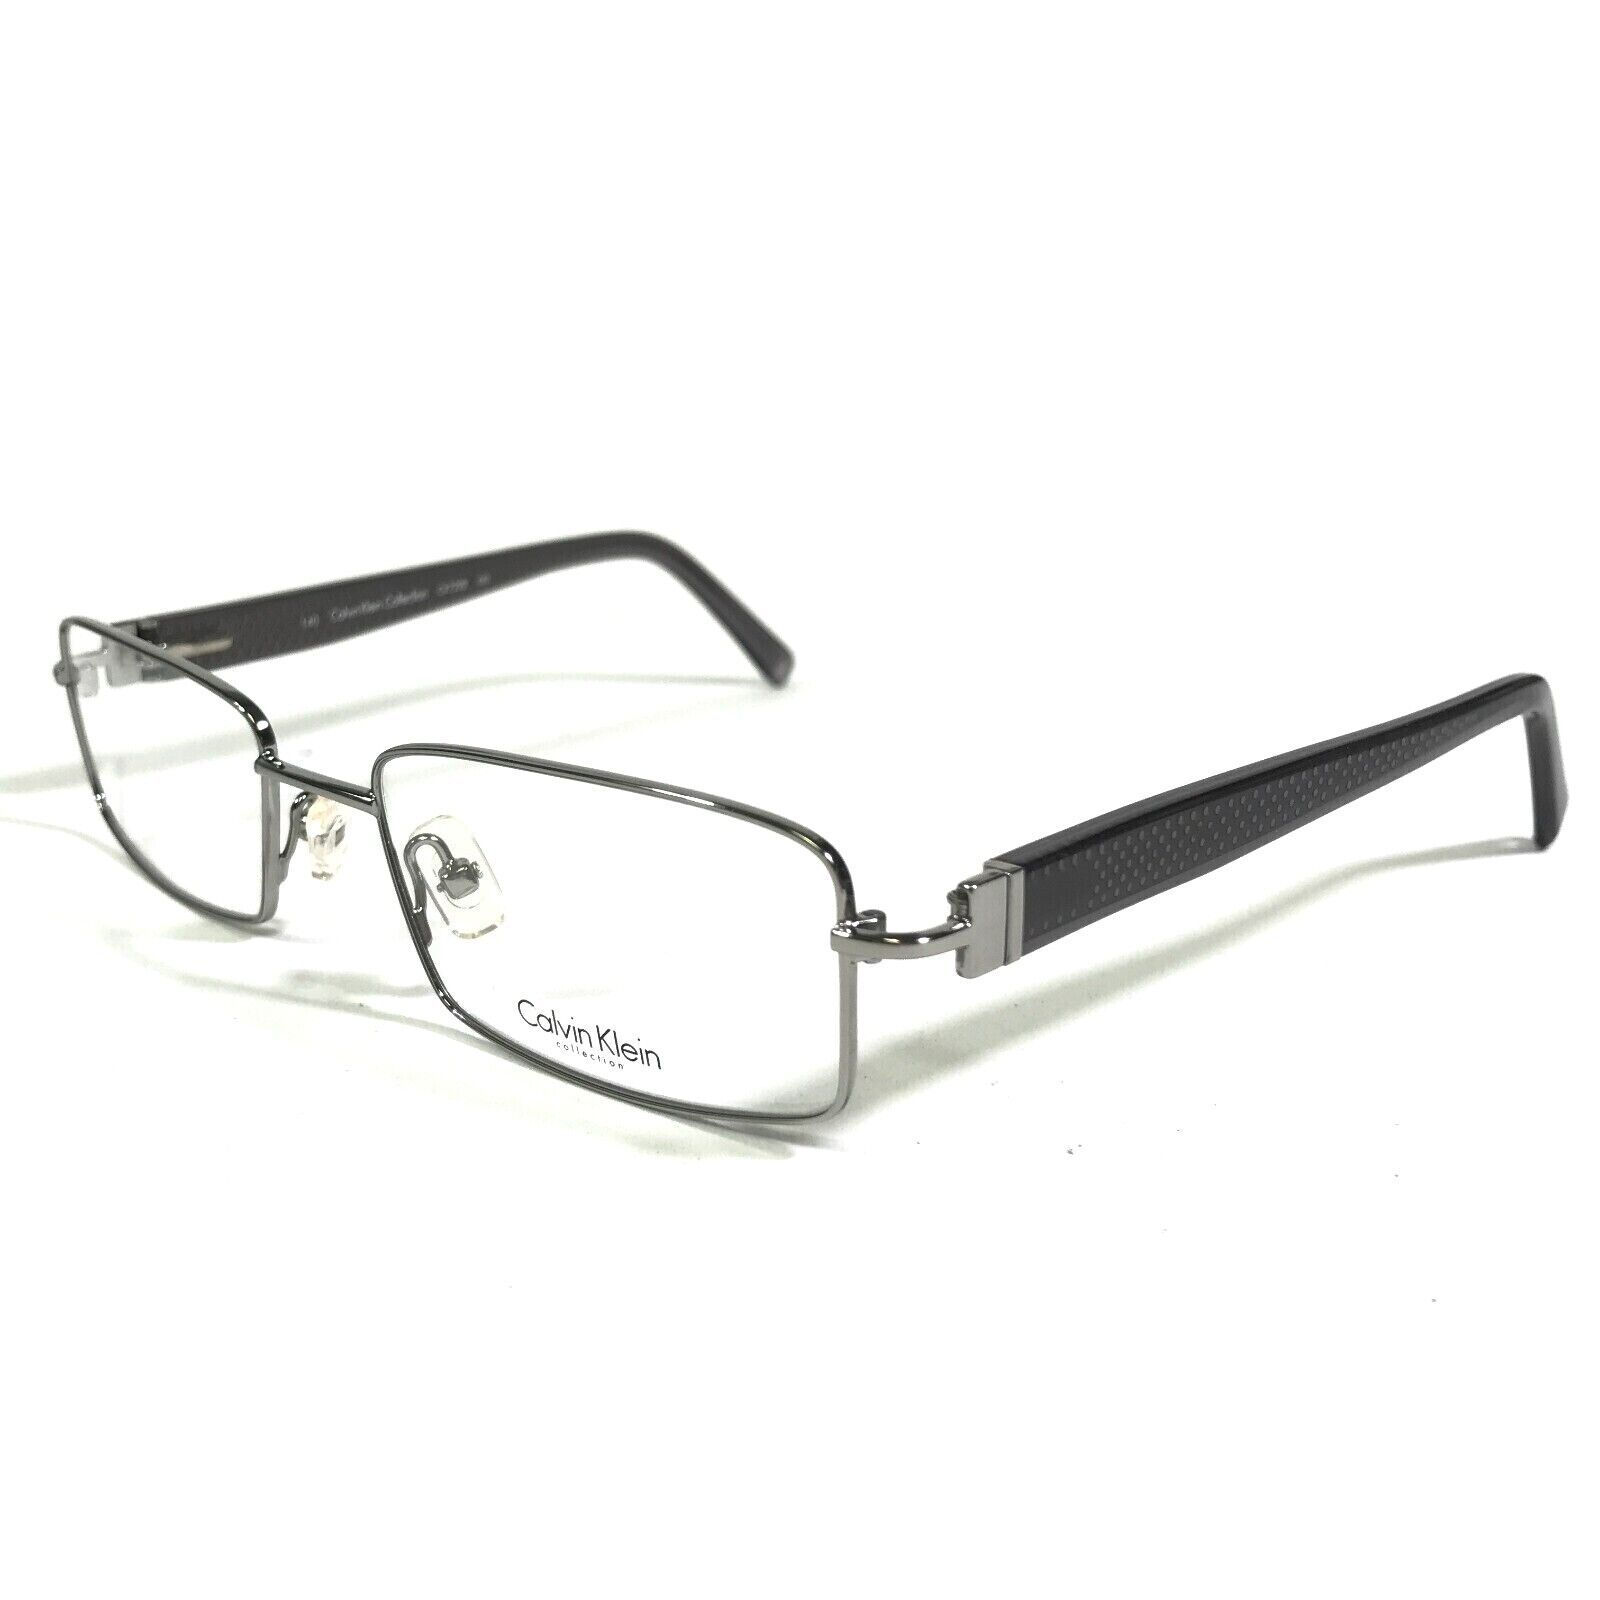 Primary image for Calvin Klein CK7228 033 Eyeglasses Frames Grey Silver Rectangular 52-18-140